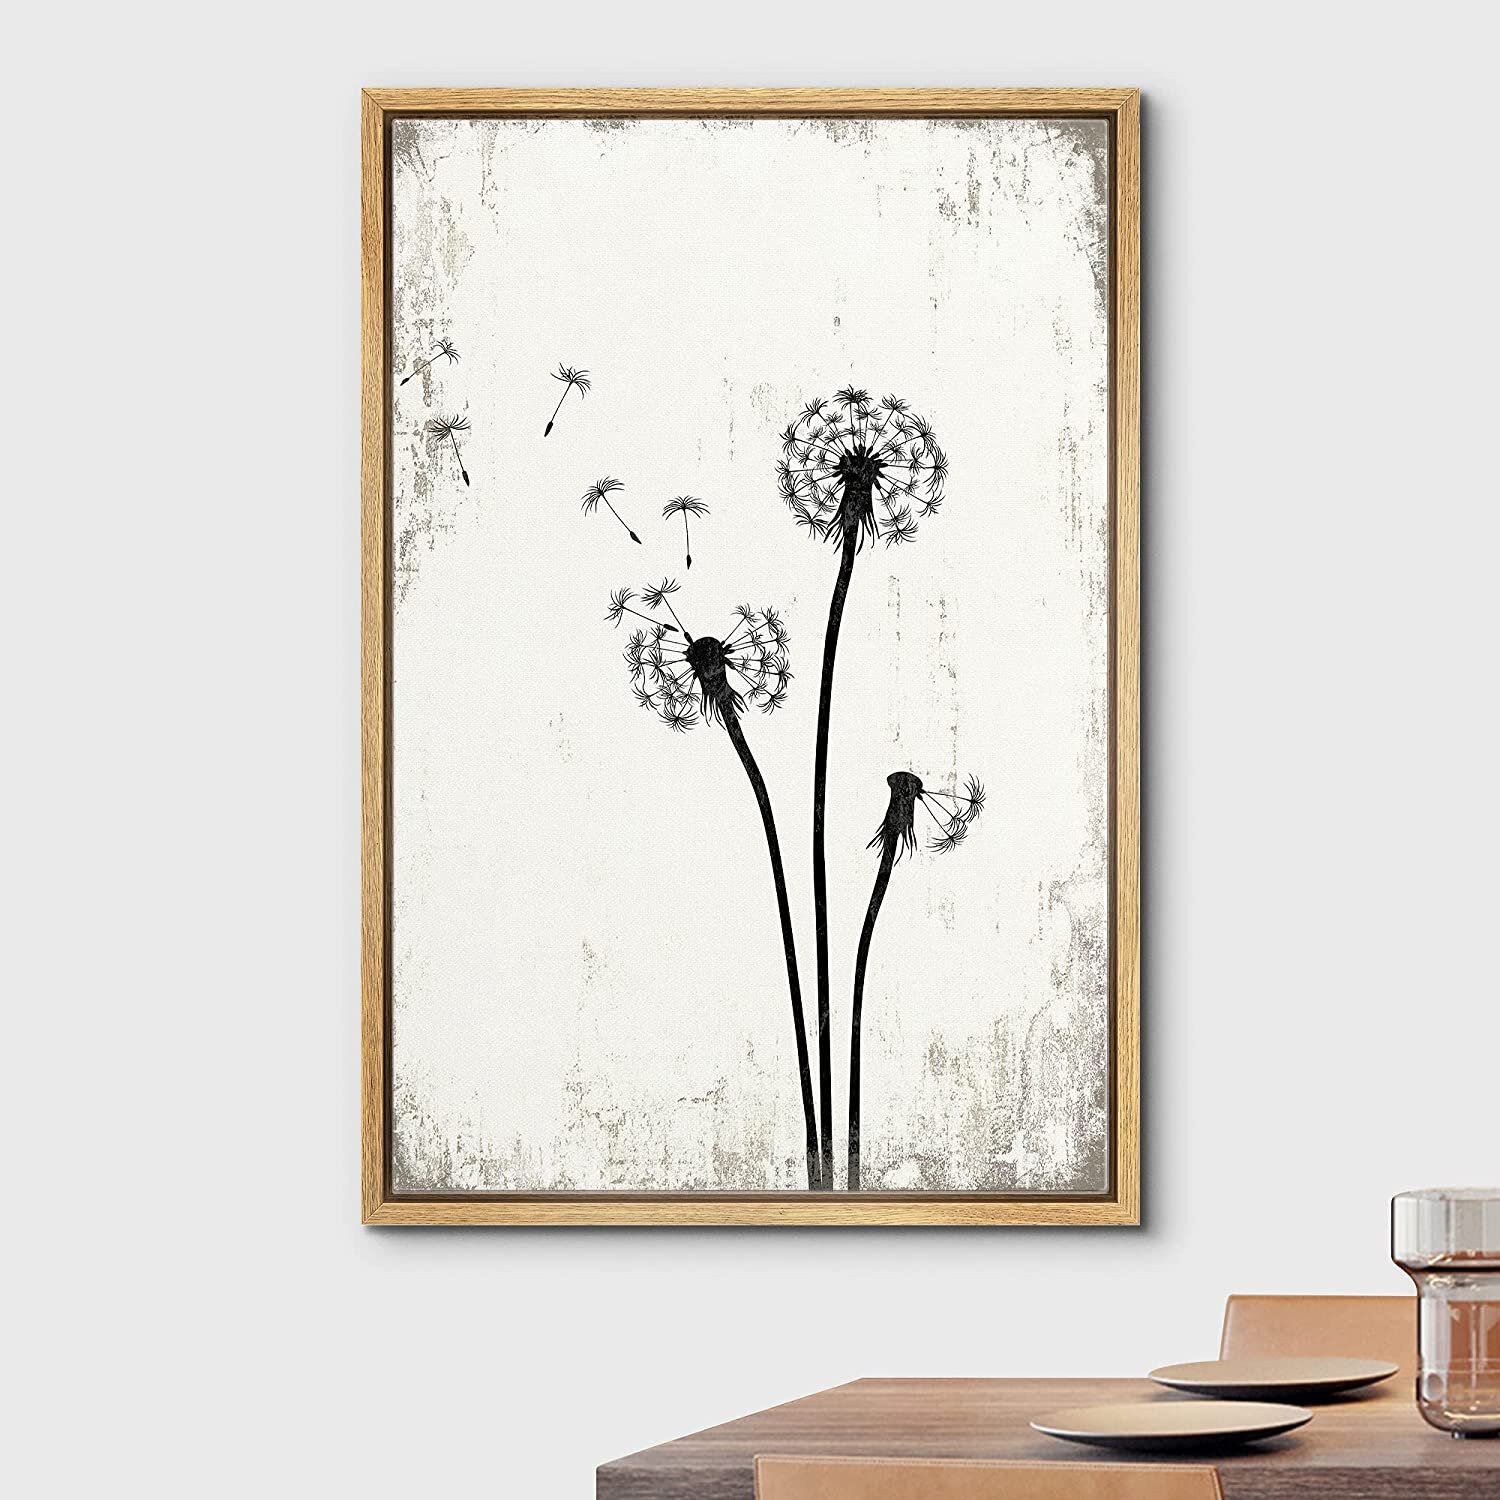 Honeybloom Framed Dandelion & Barn Canvas Wall Art, 30x40